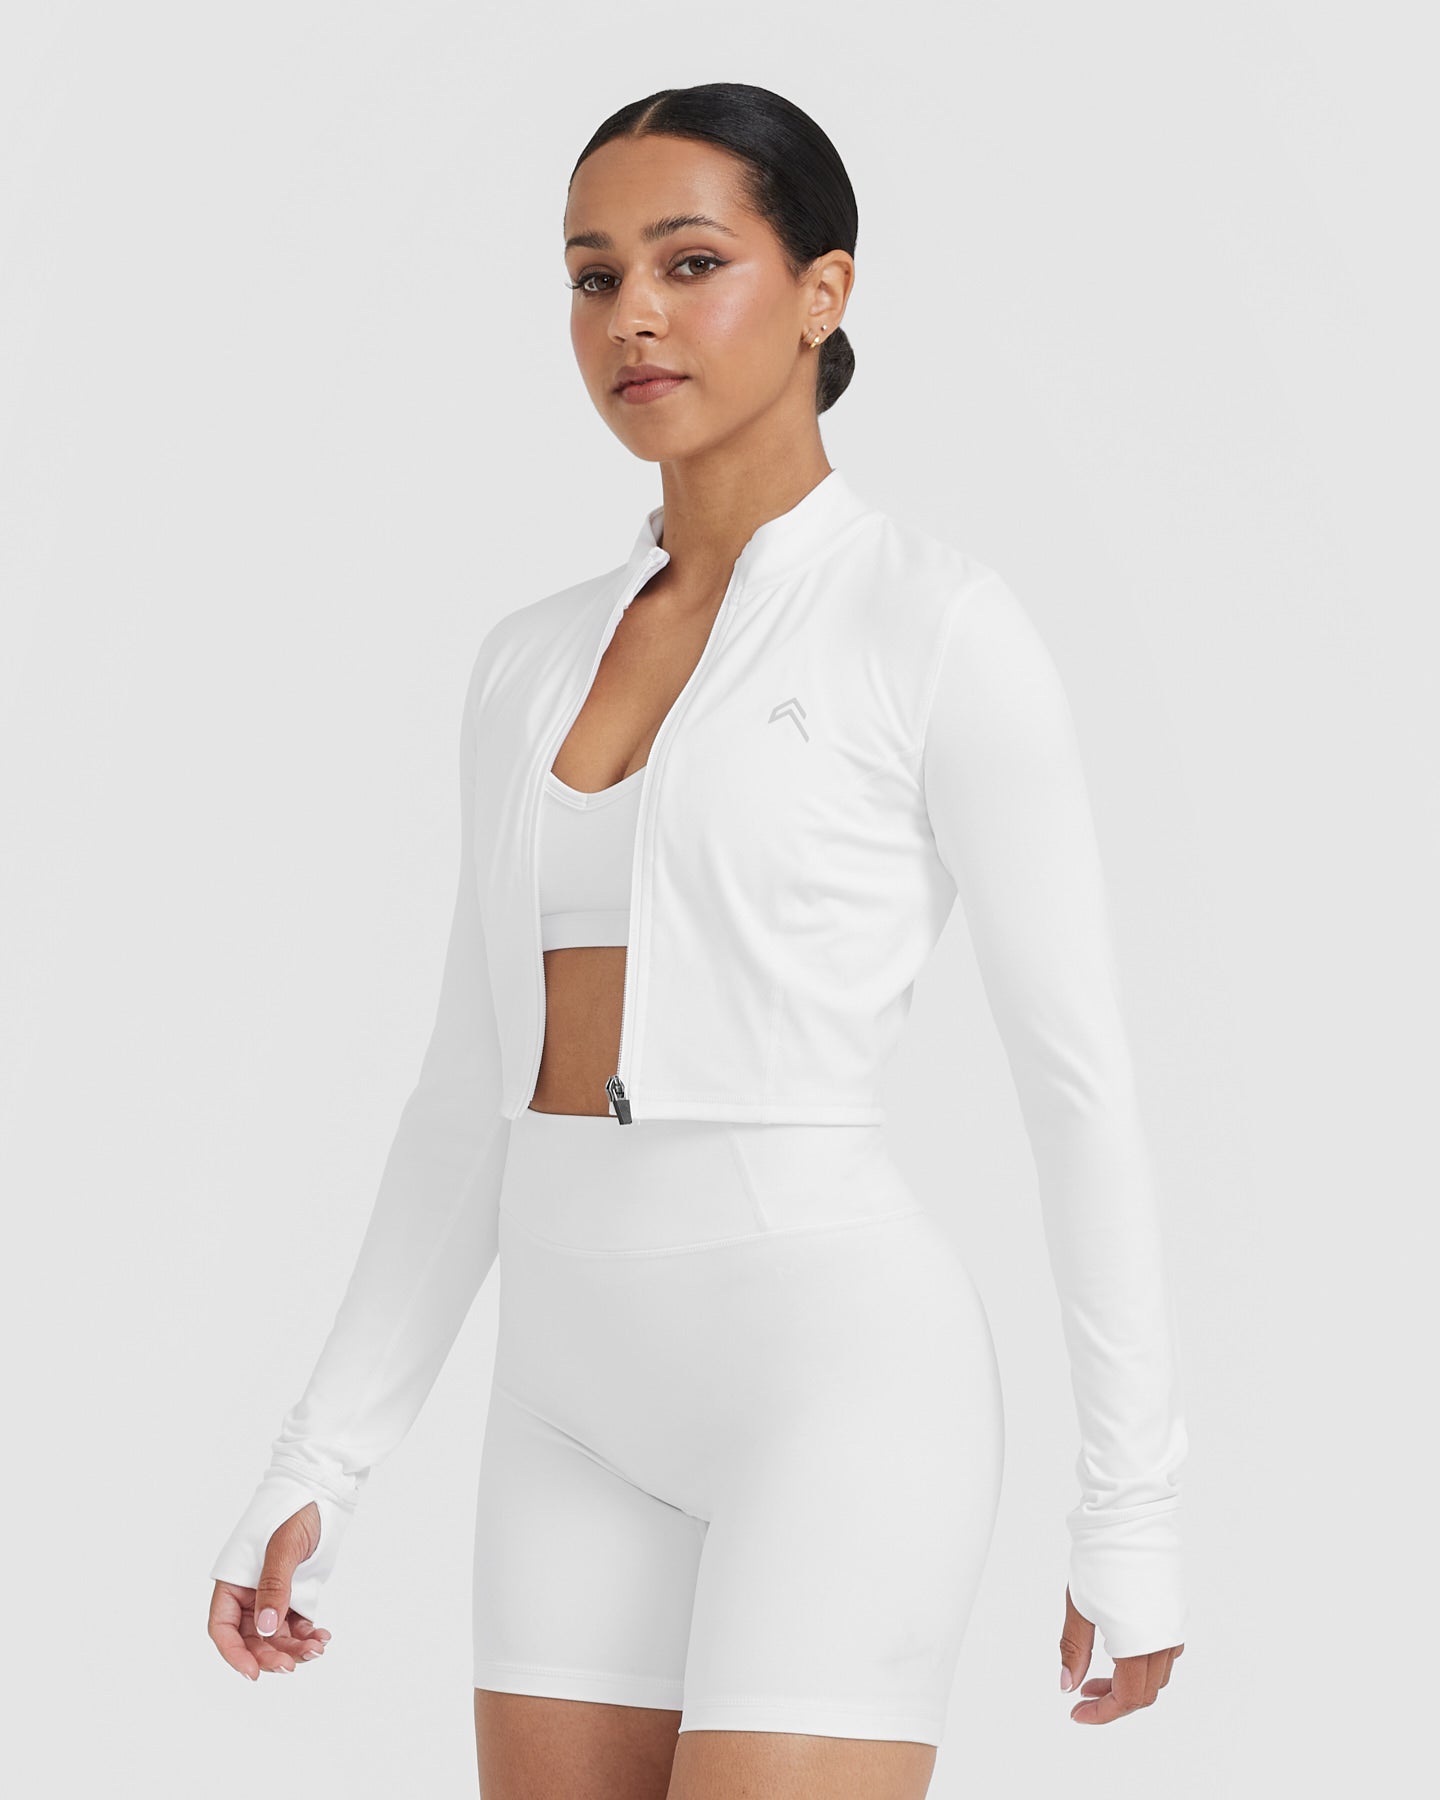 White Crop Jacket Women's - Long Sleeve | Oner Active US